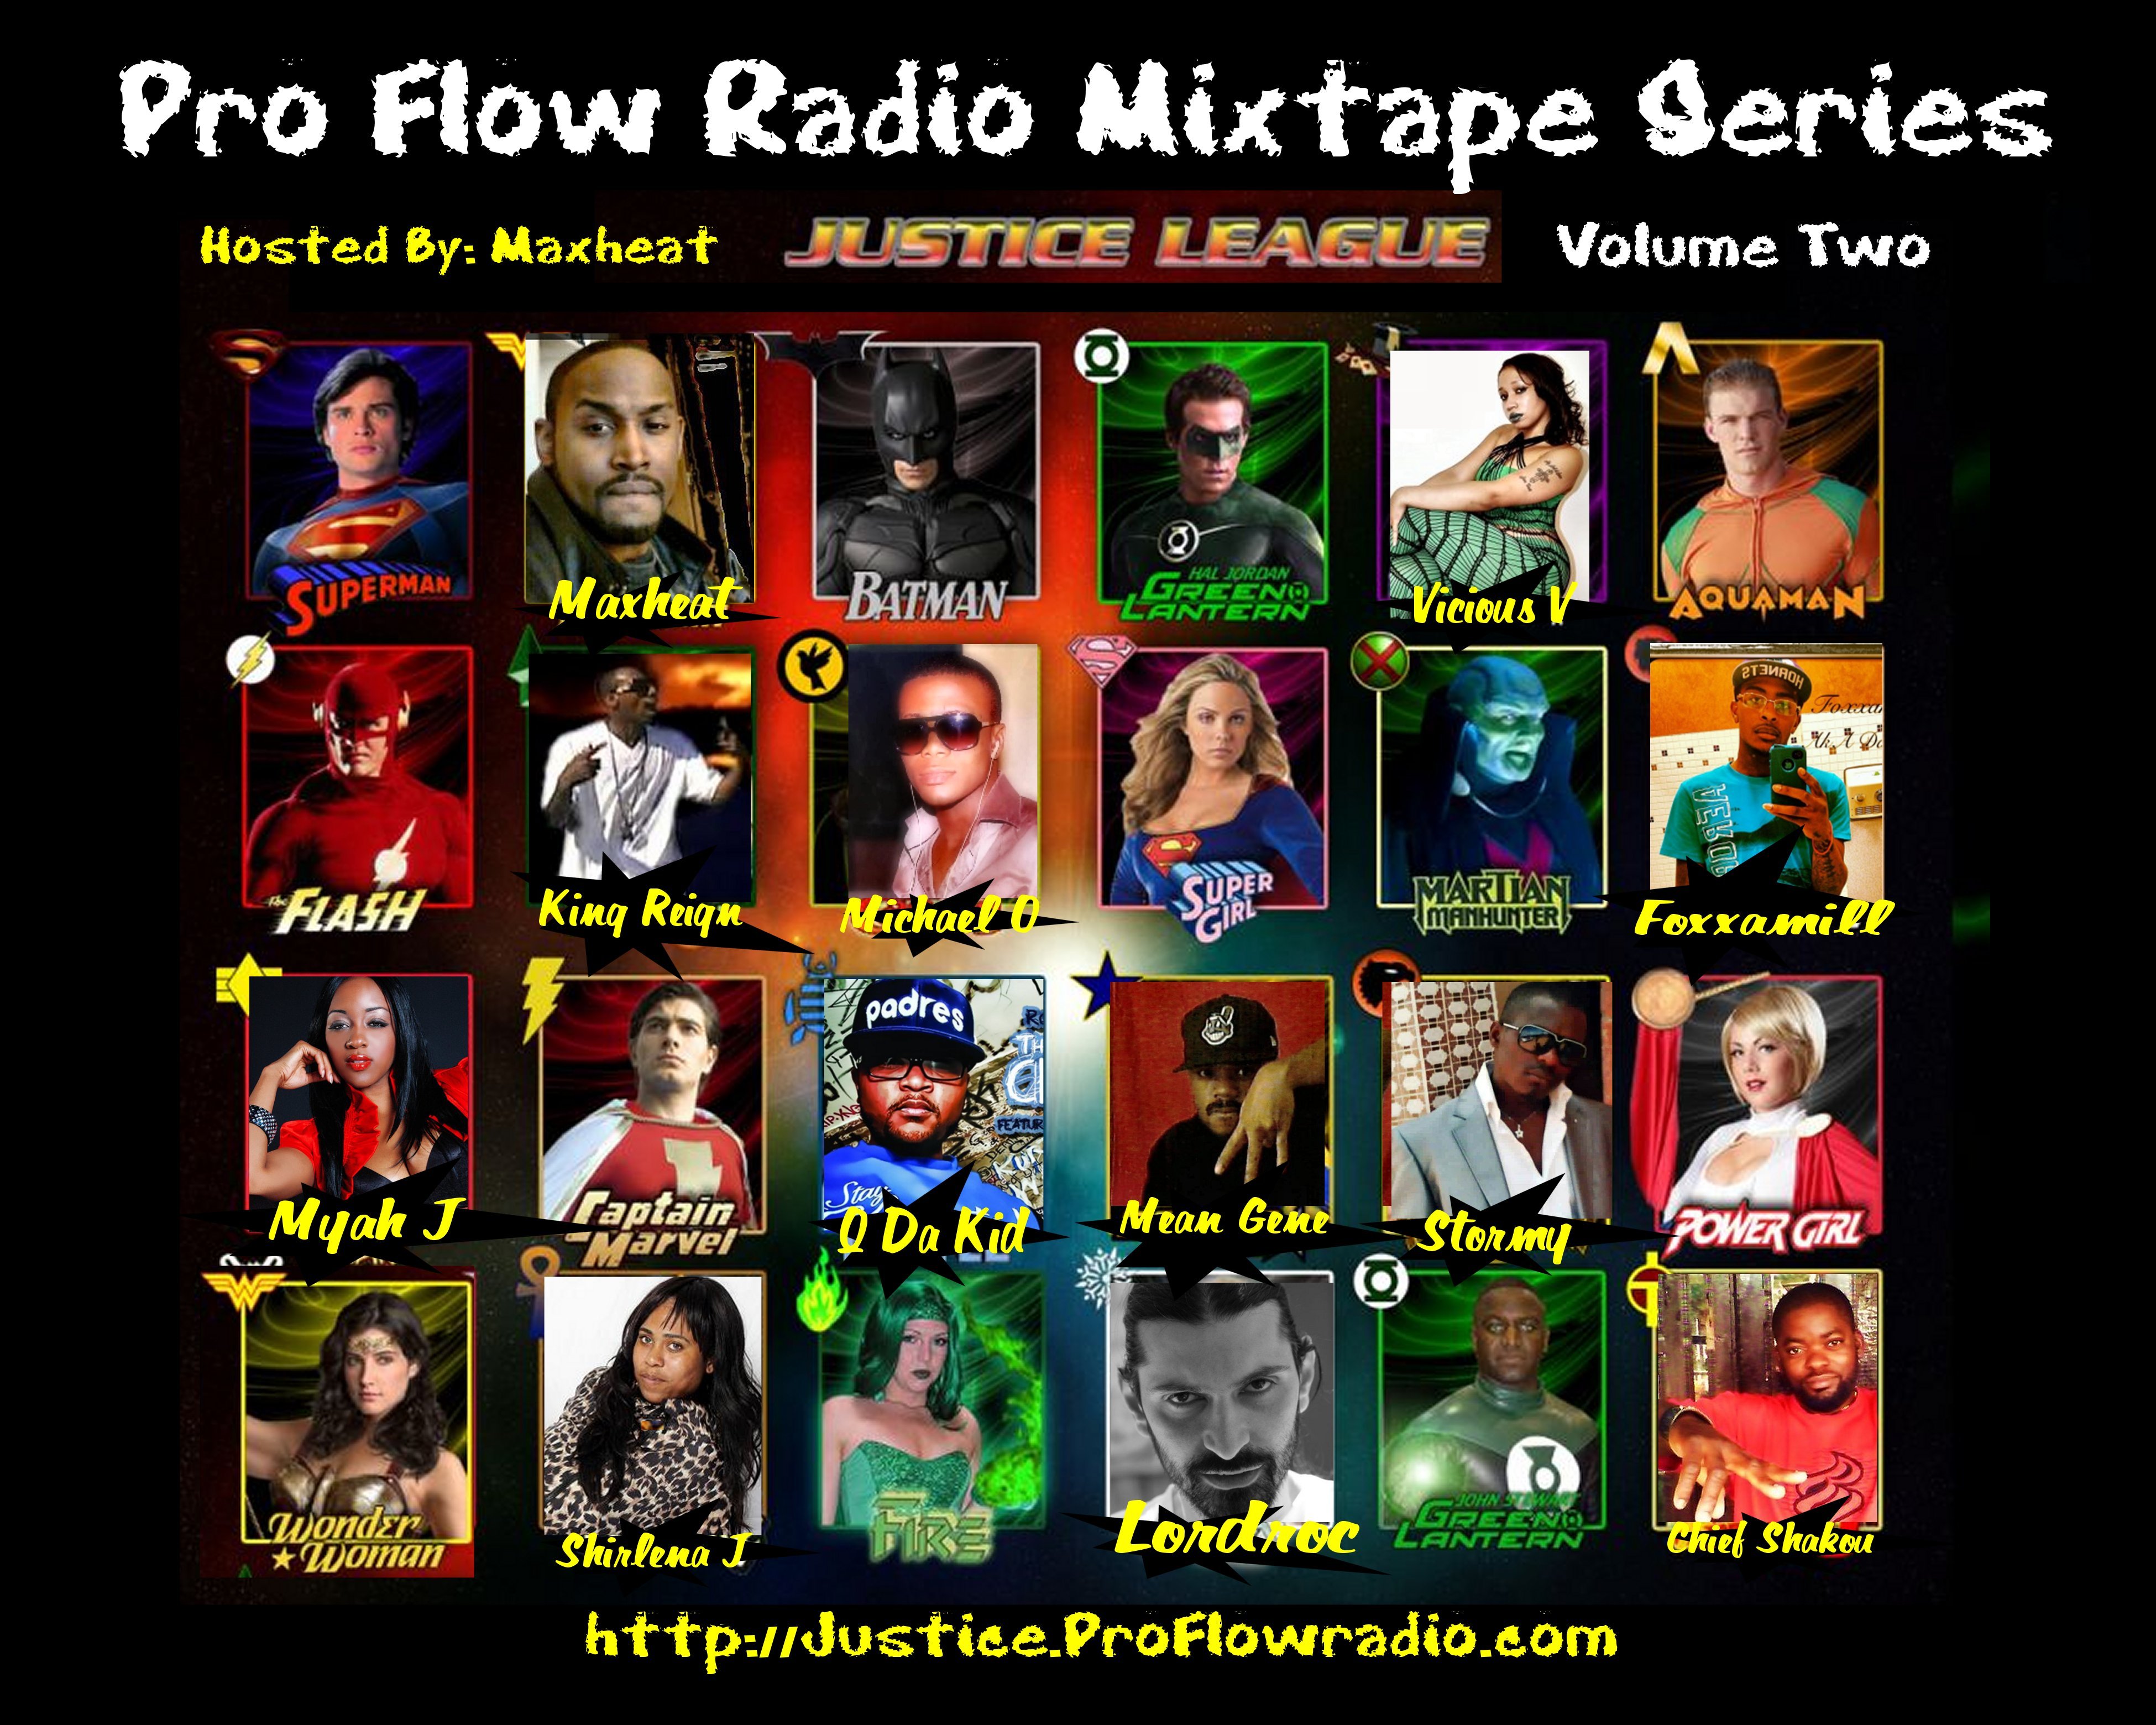 Pro Flow Radio volume 2 Justice League